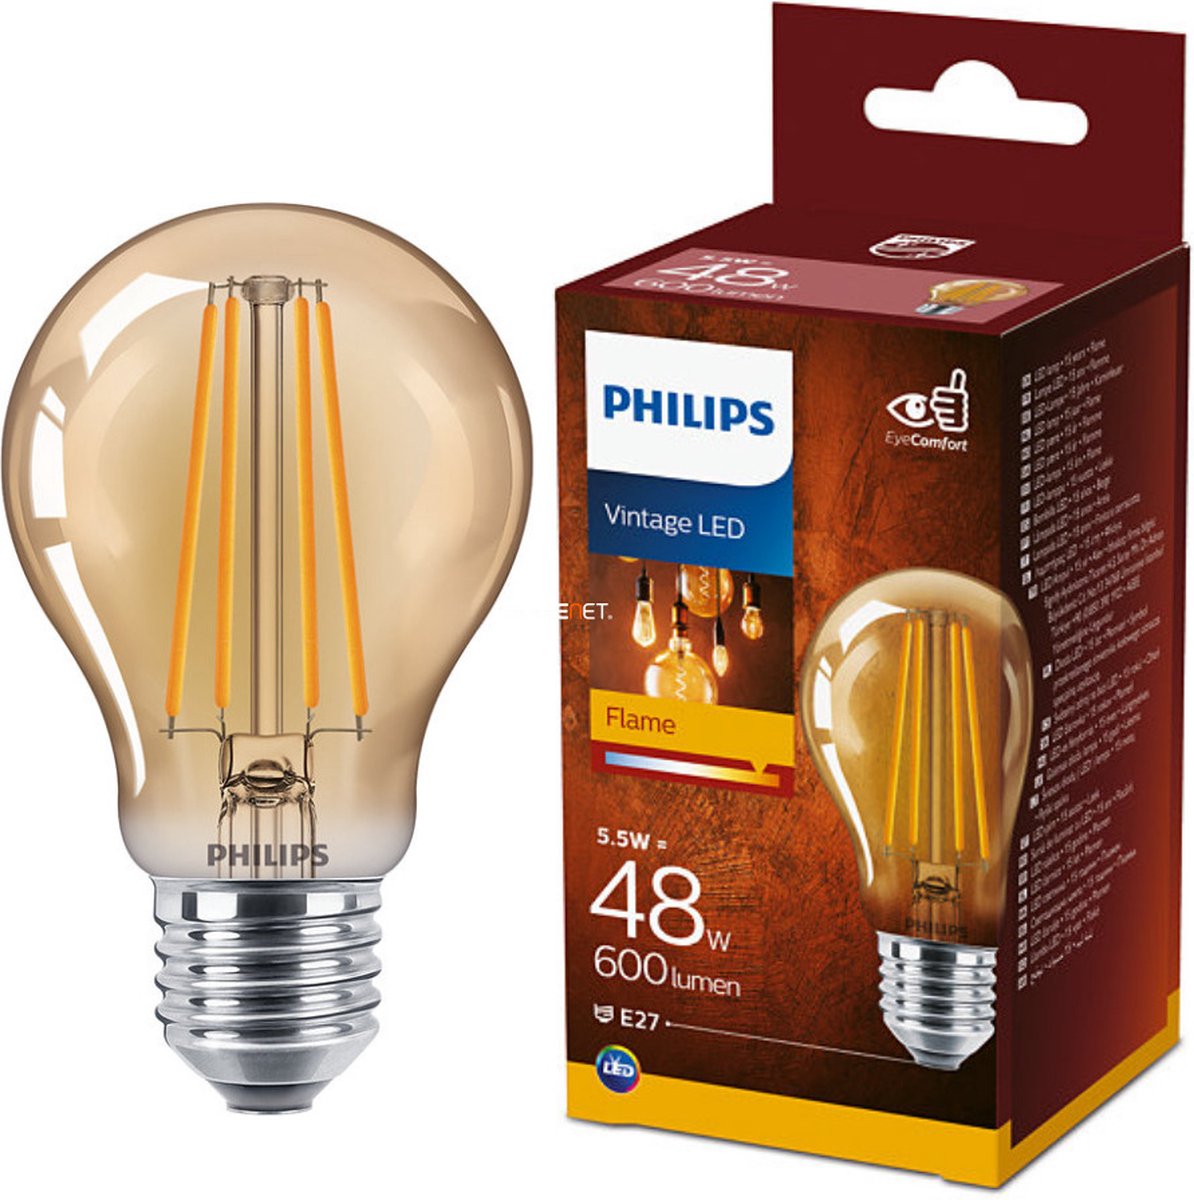 hier tempo Botsing Philips LED Flame E27 - 5.5W (48W) - Warm Wit Licht - Niet Dimbaar | bol.com